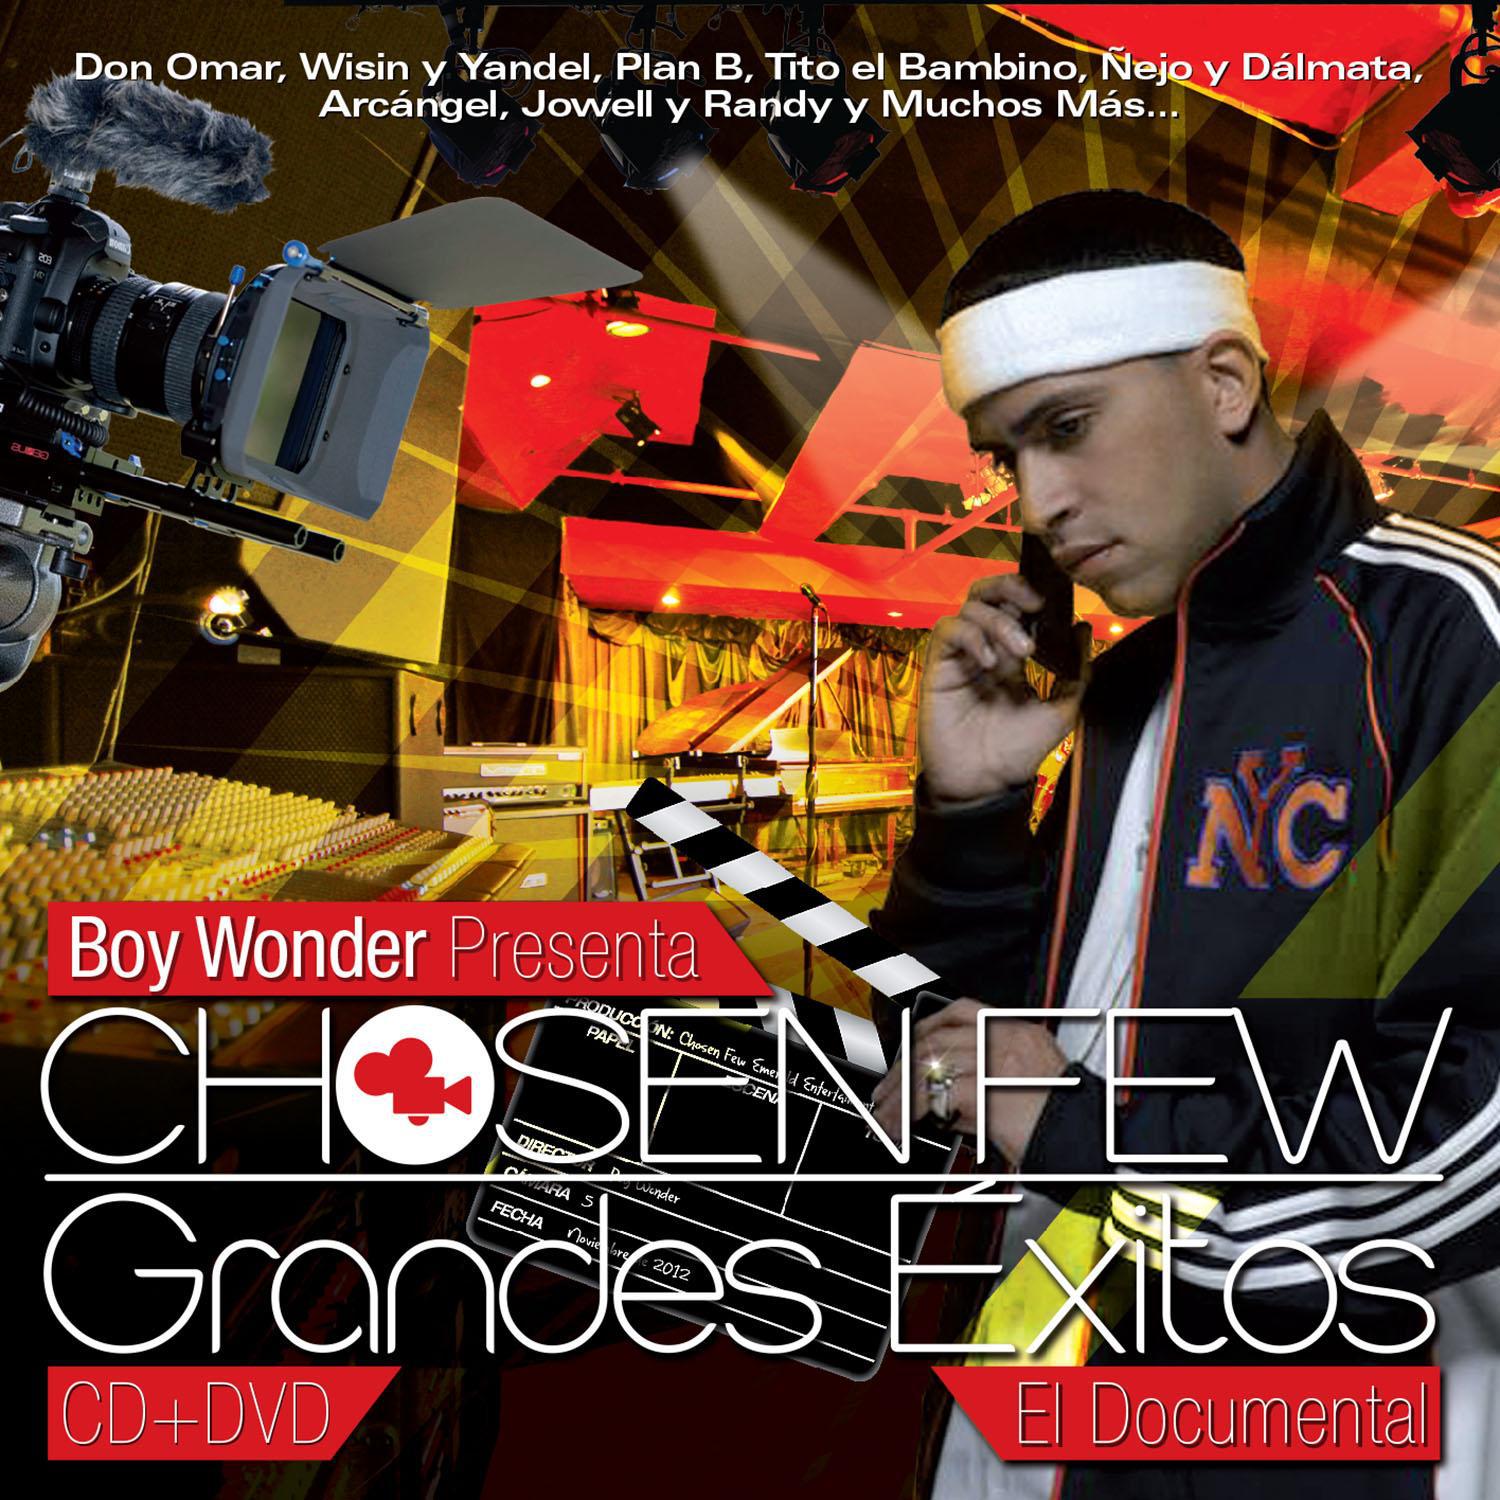 Boy Wonder Presents: Chosen Few Grandes Exitos